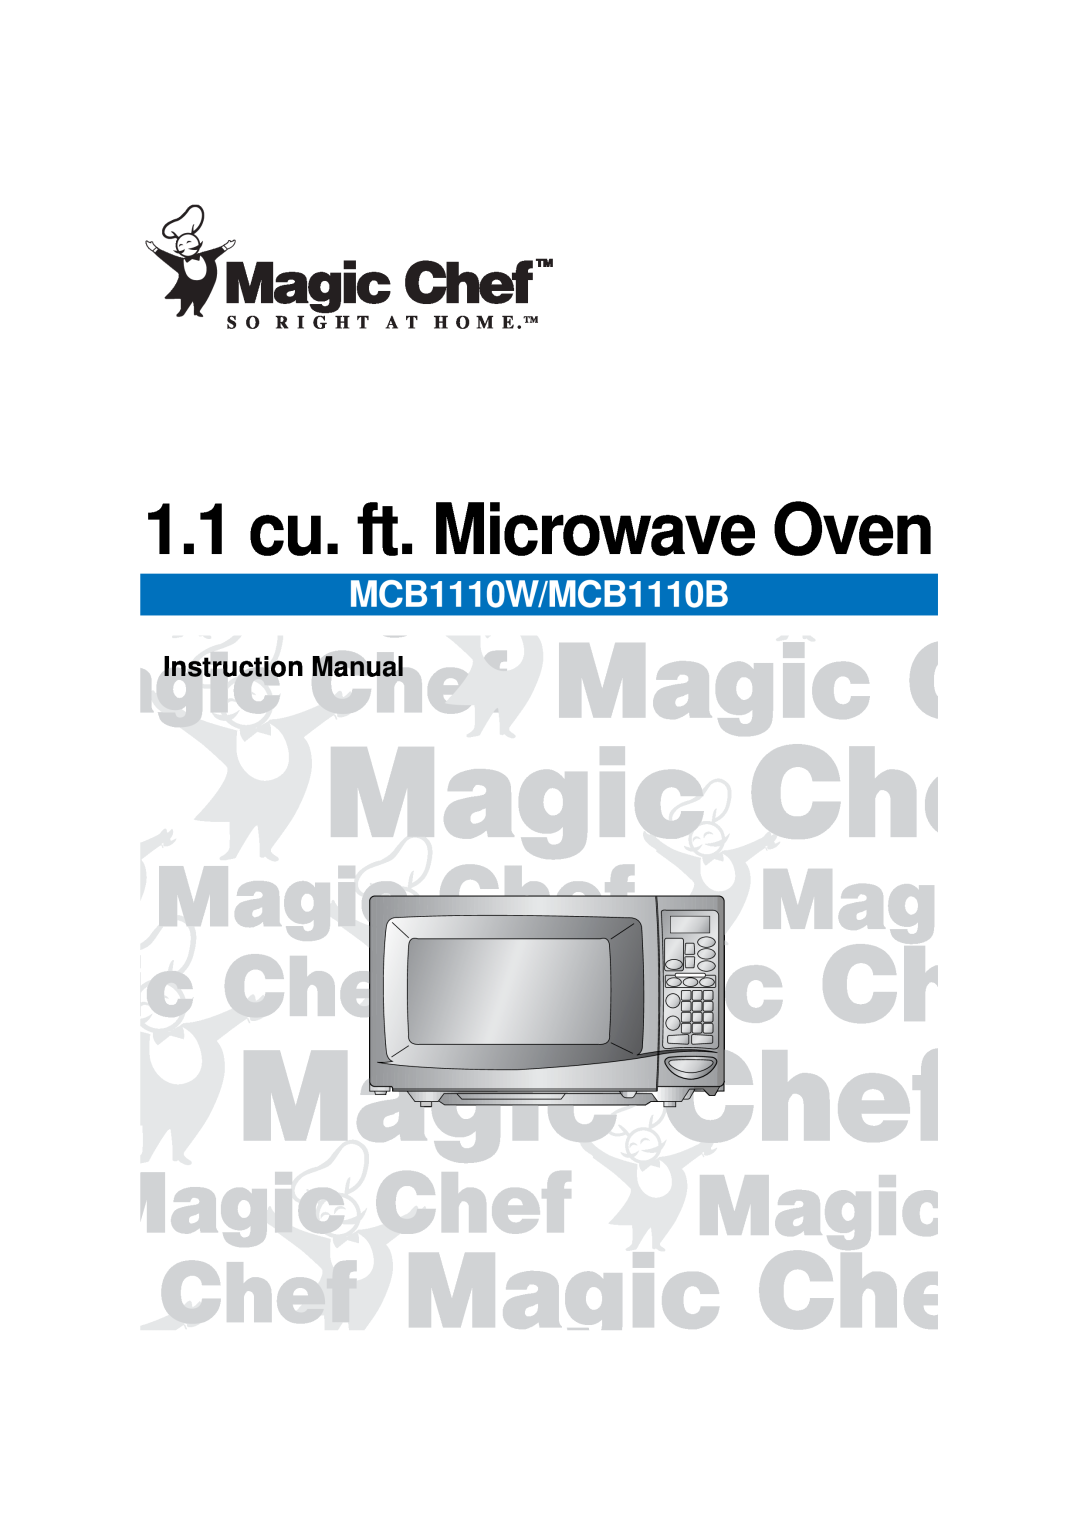 Magic Chef instruction manual 1.1 cu. ft. Microwave Oven, MCB1110W/MCB1110B 